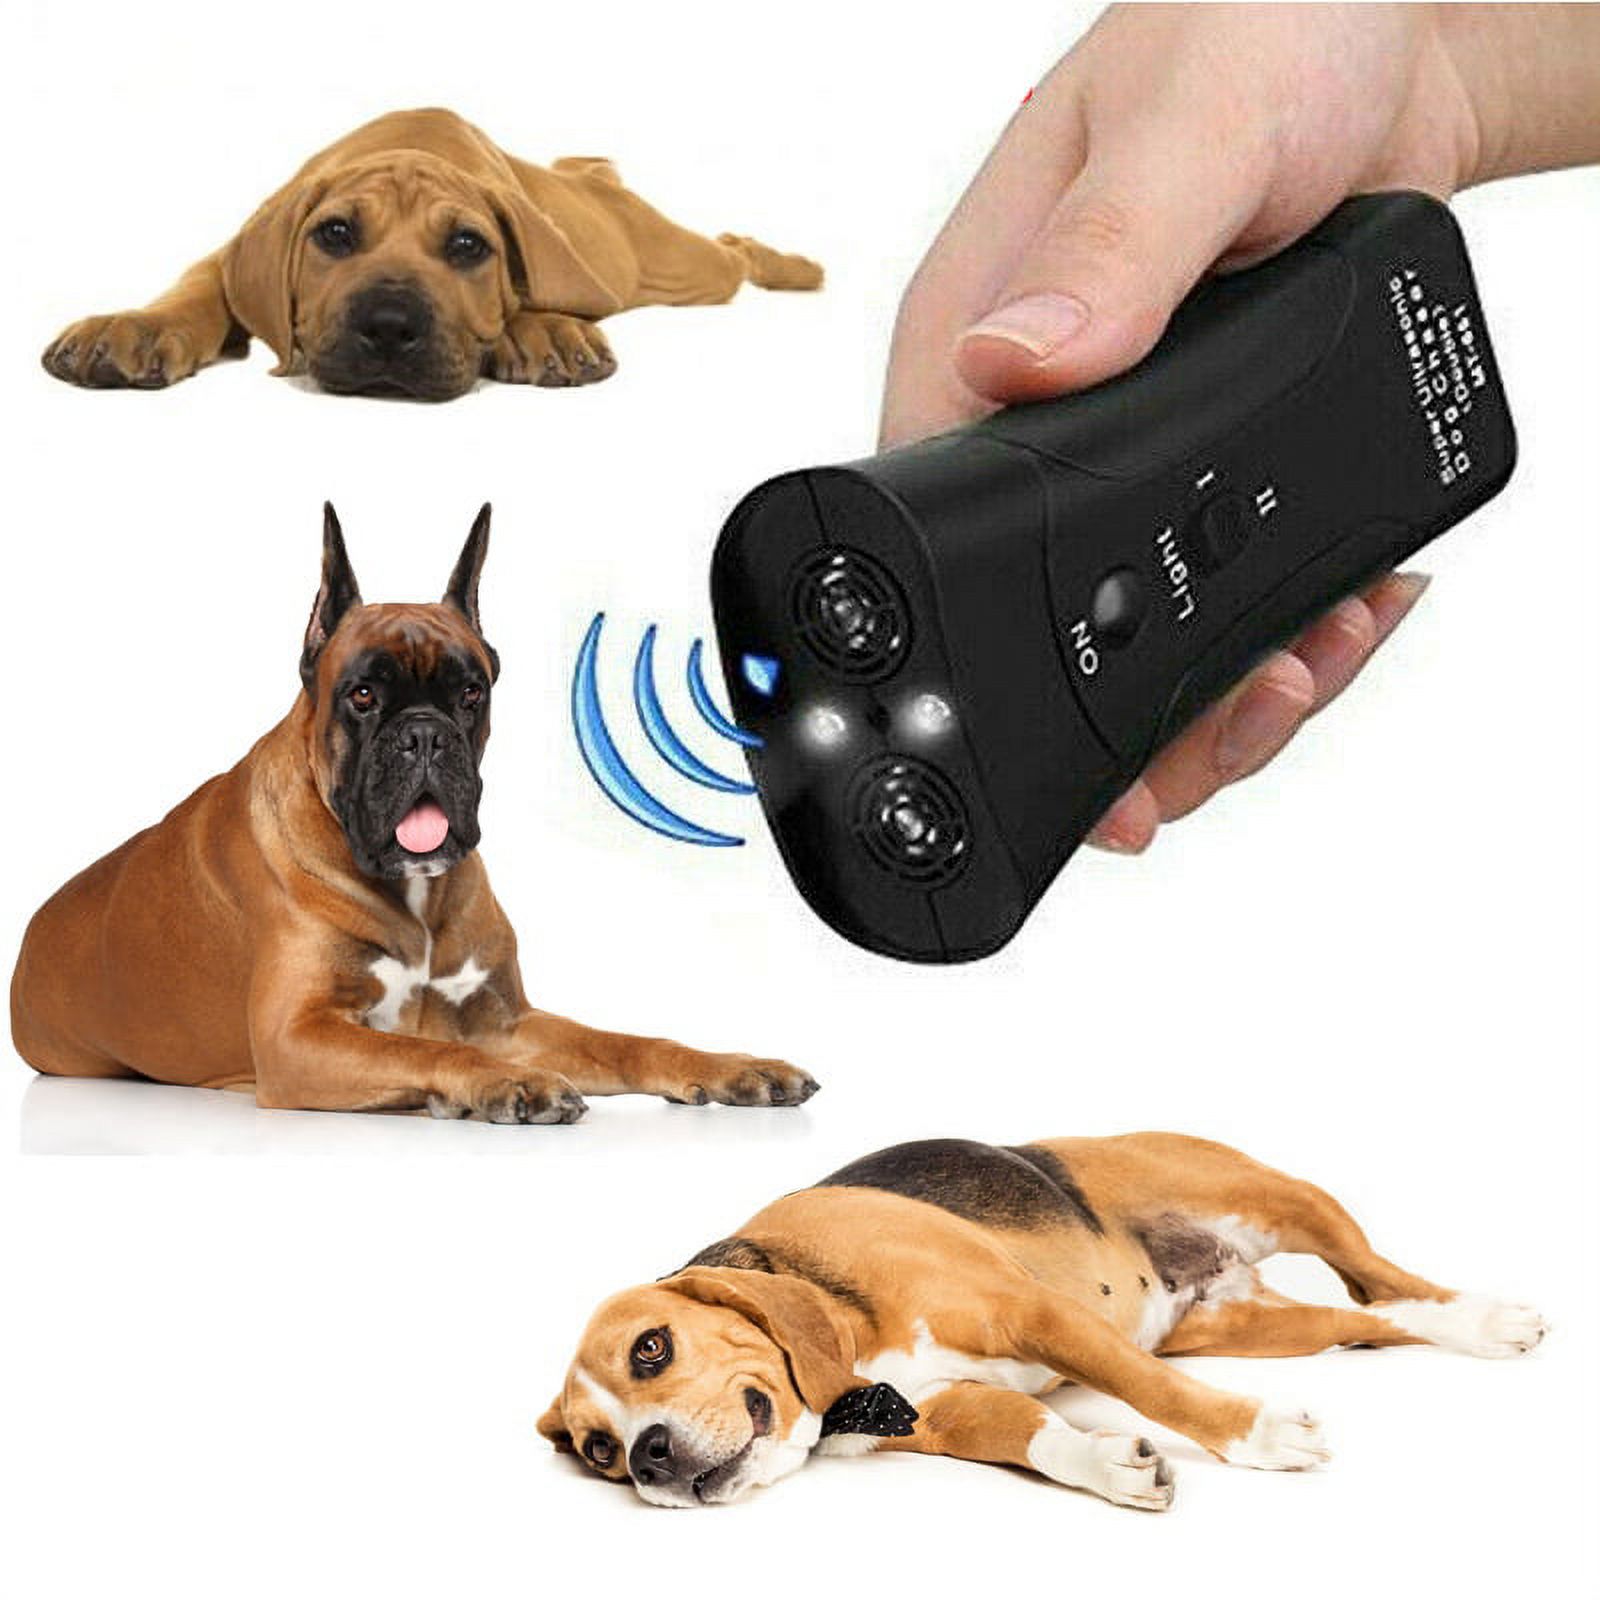 Ultrasonic Anti Dog Barking Pets Trainer LED Gentle Pet gentle Sonic Tools - image 4 of 5